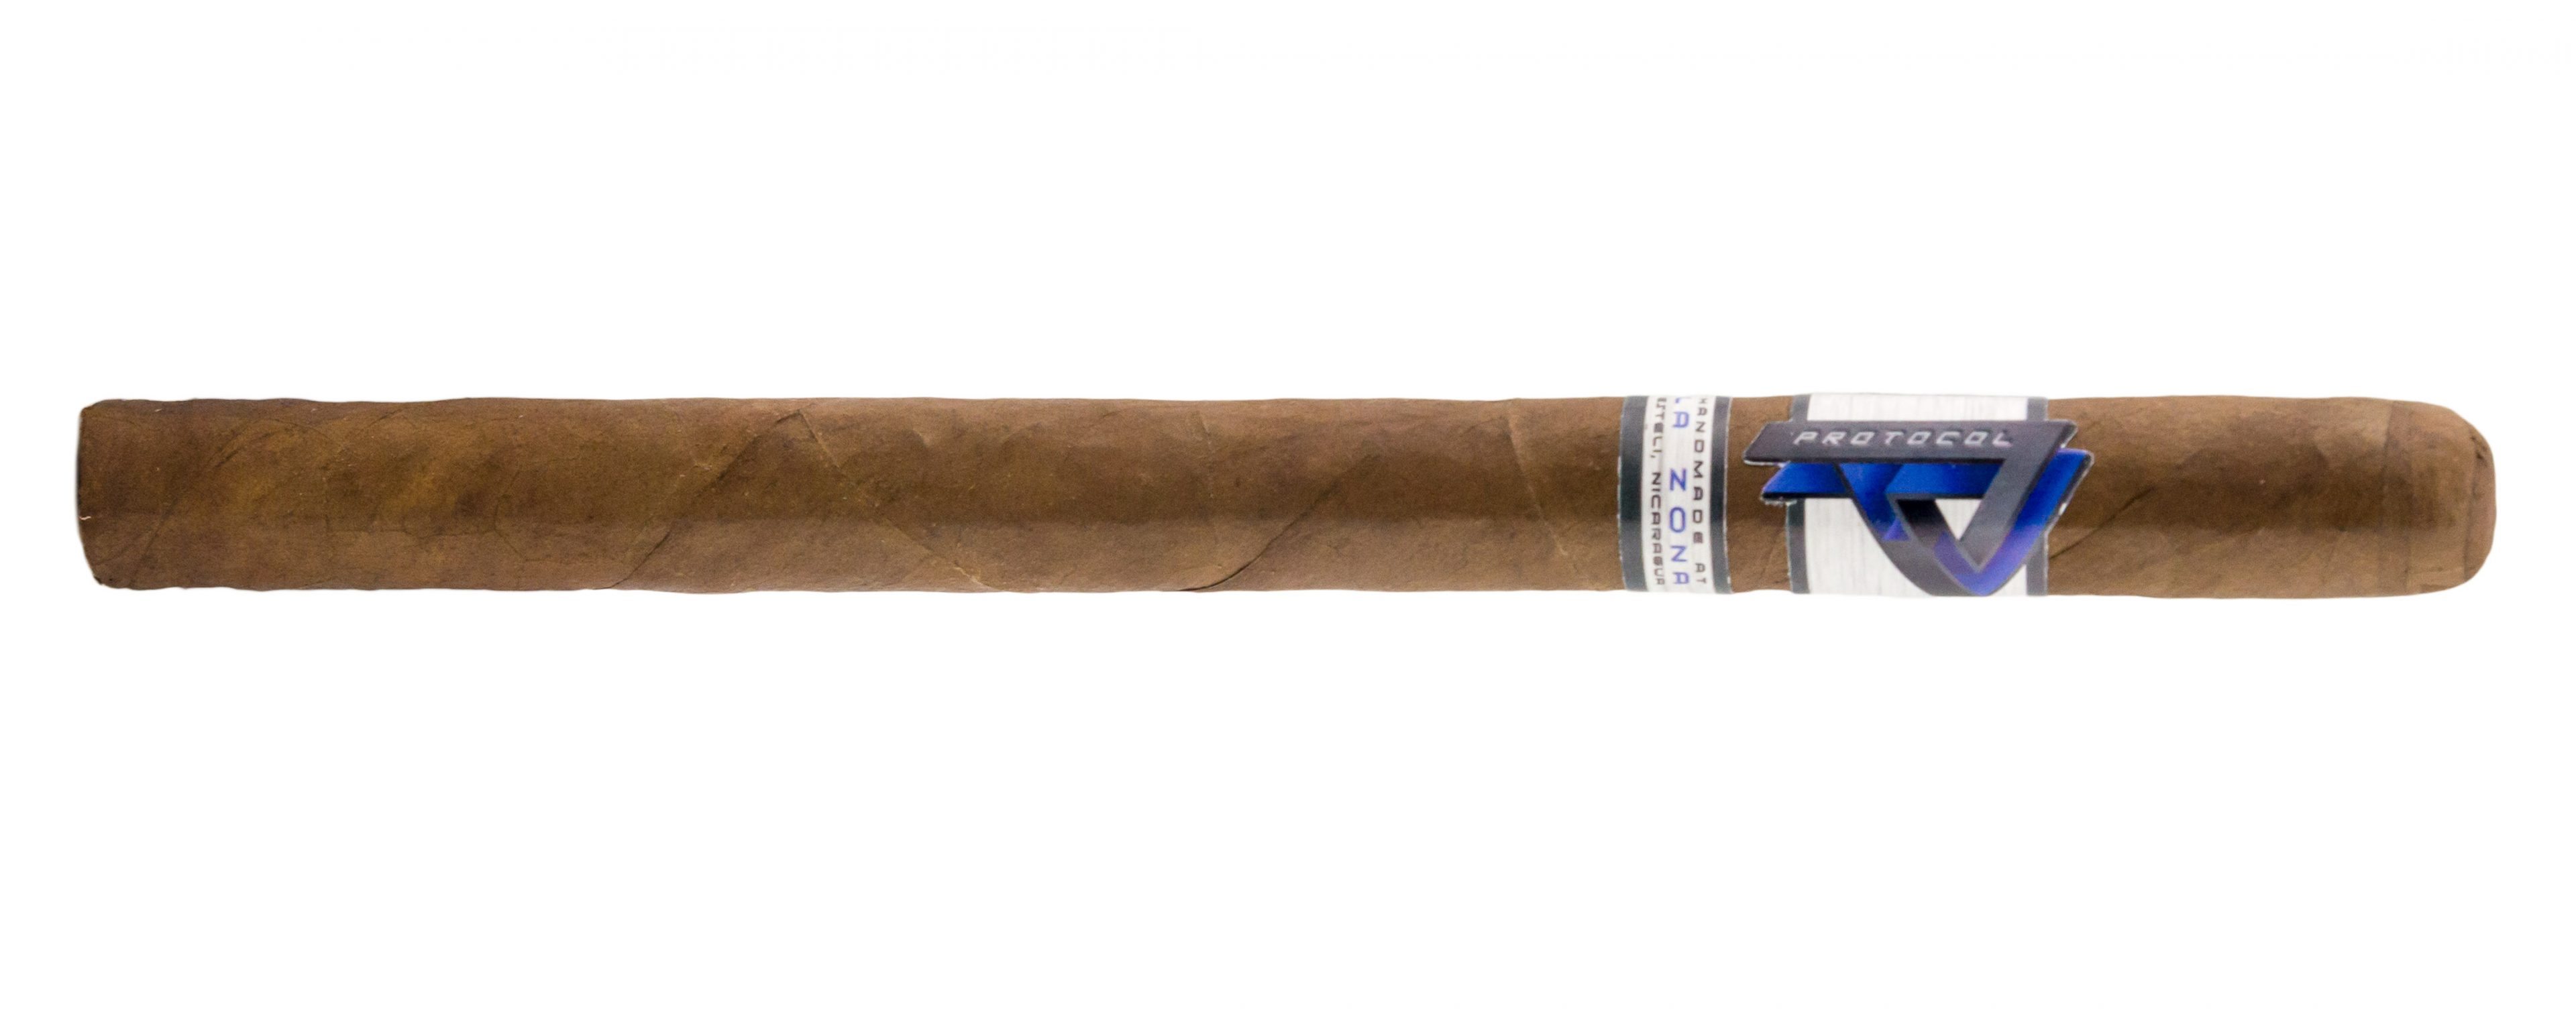 Blind Cigar Review: Cubariqueño | Protocol Lancero